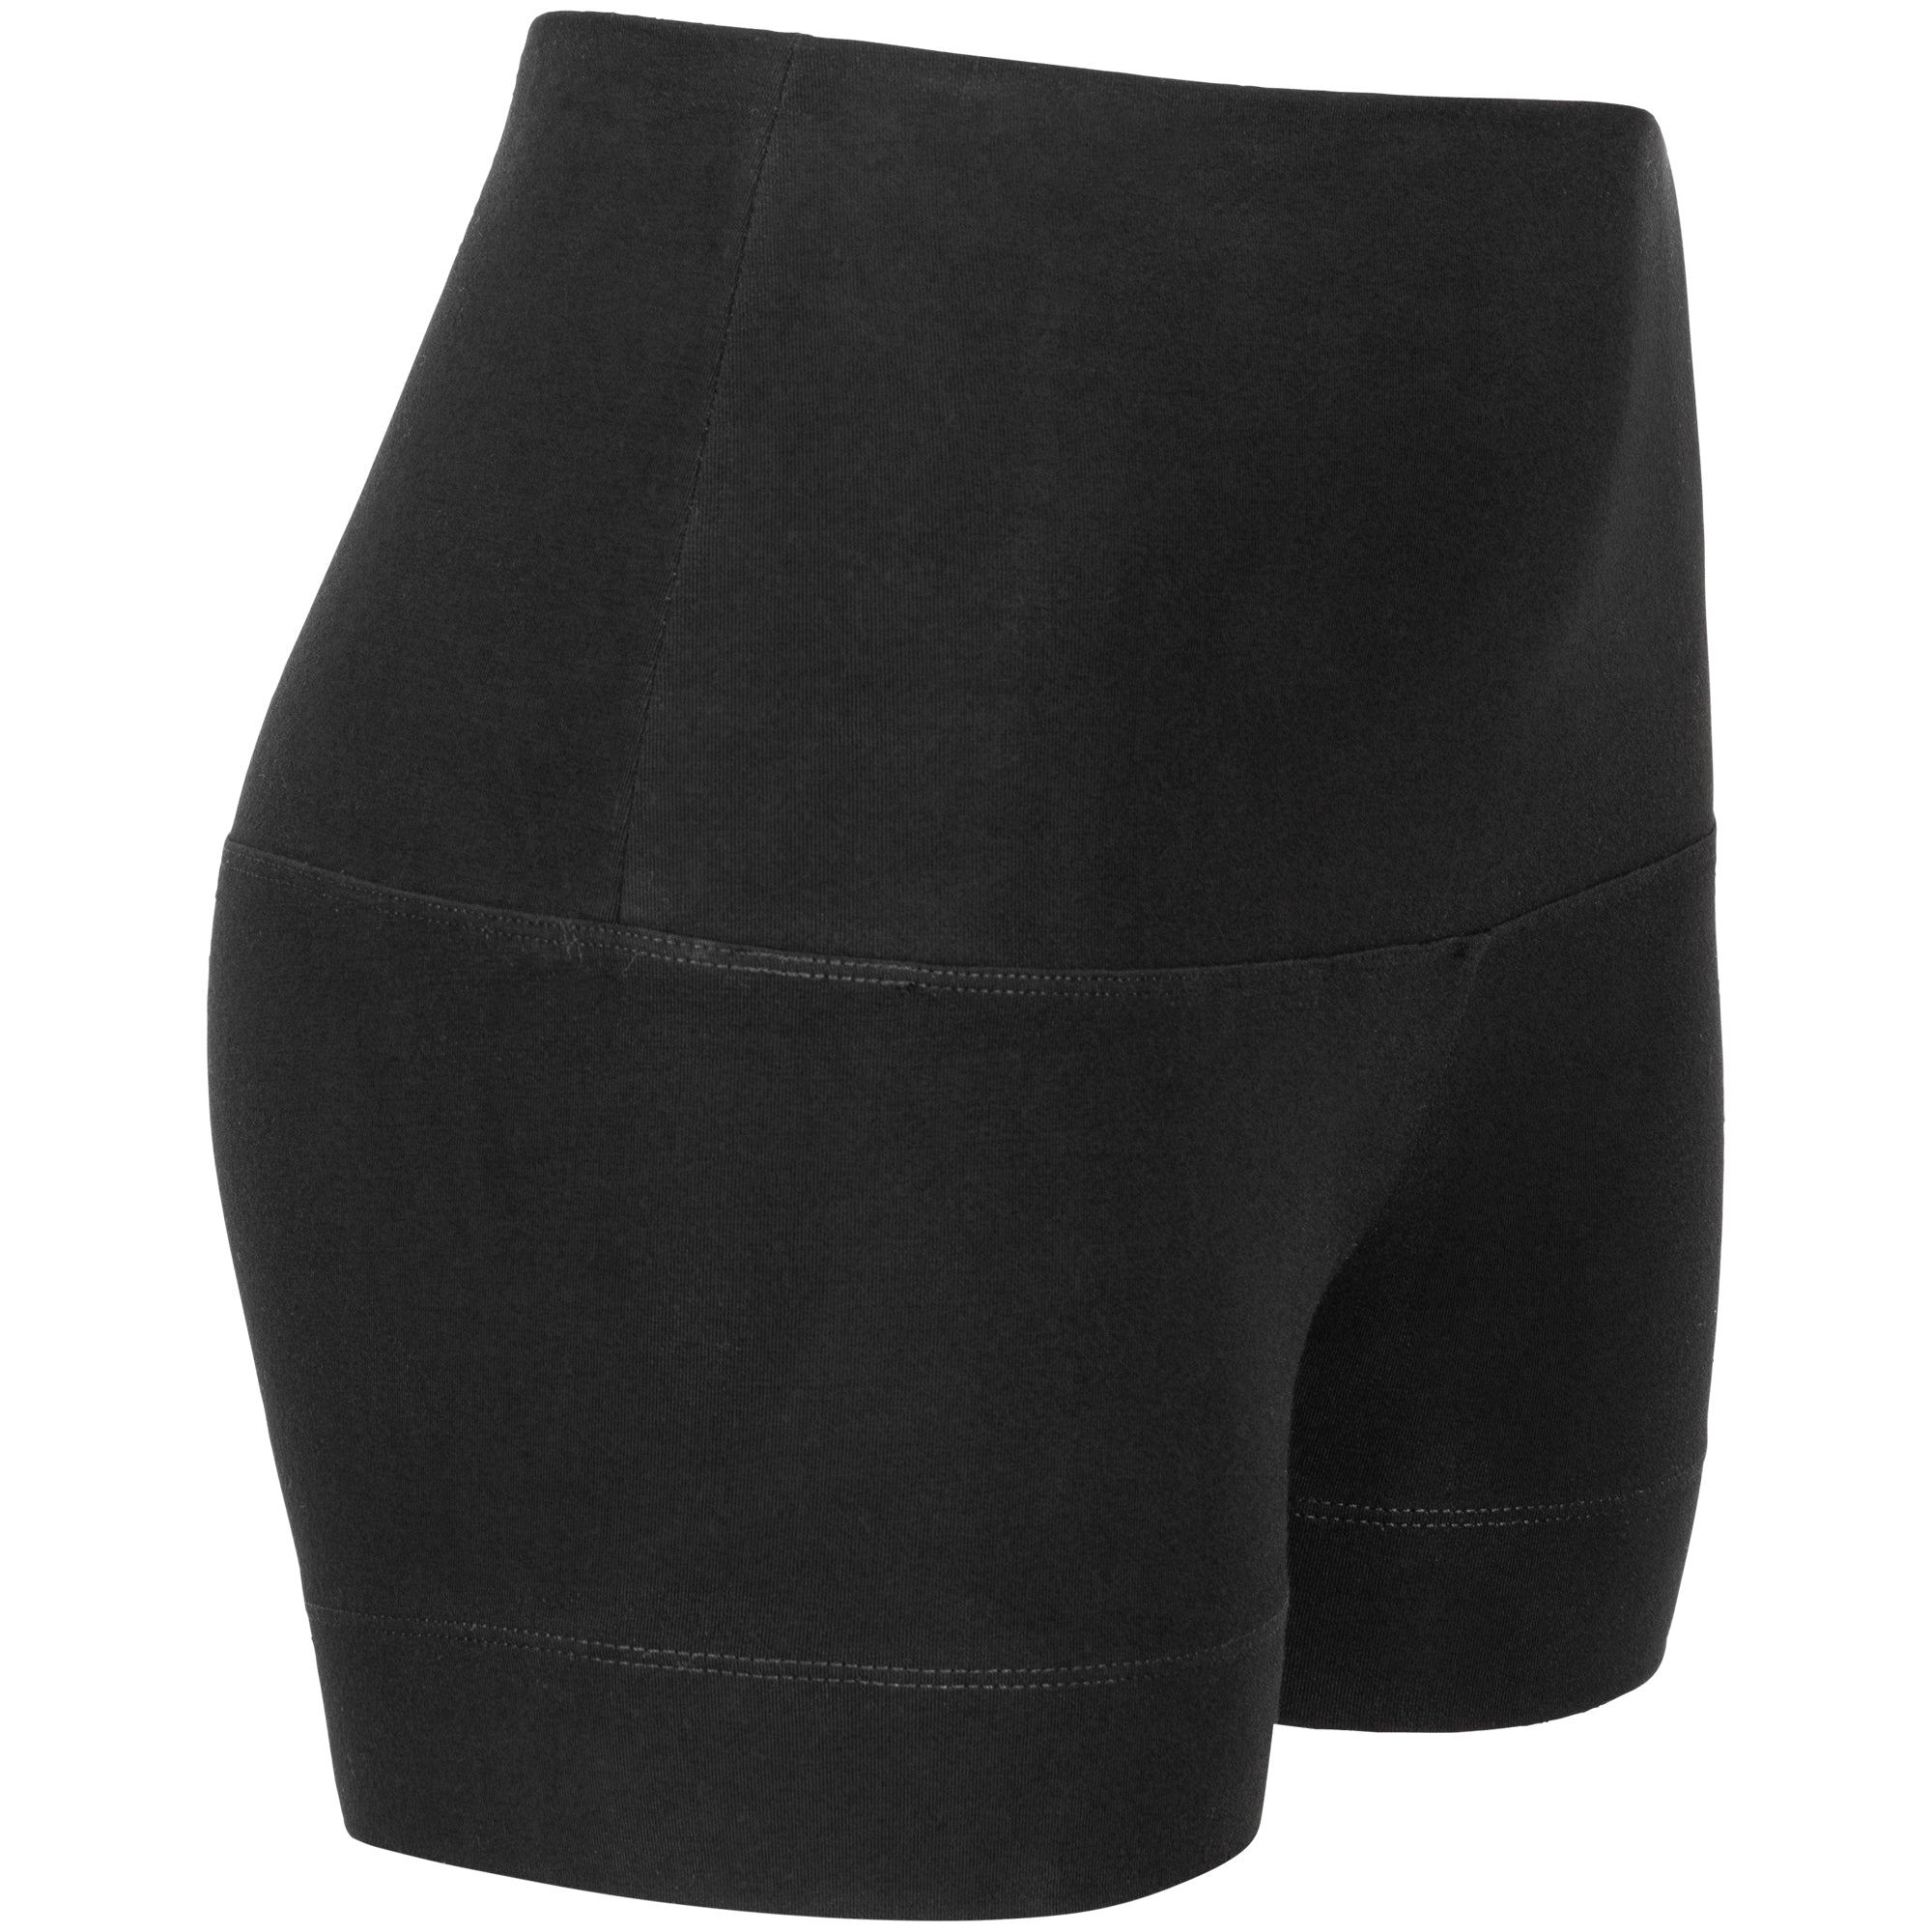 Short Pants black (thick material, runs half a size smaller)